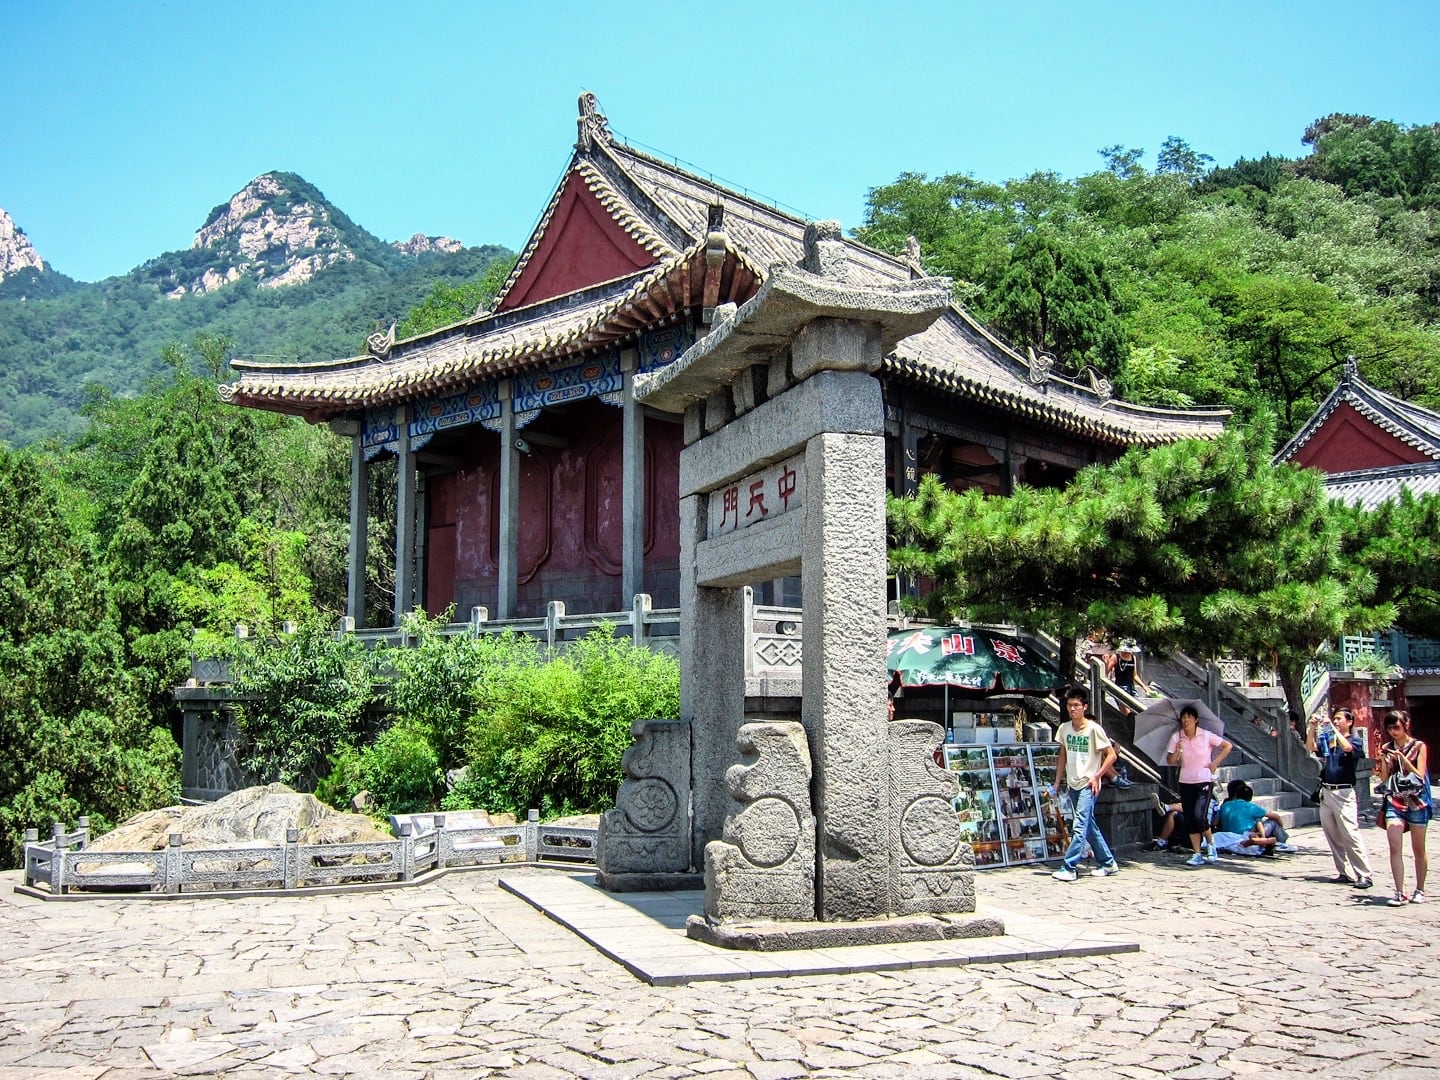 Mount Tai overlooking a temple pavilion